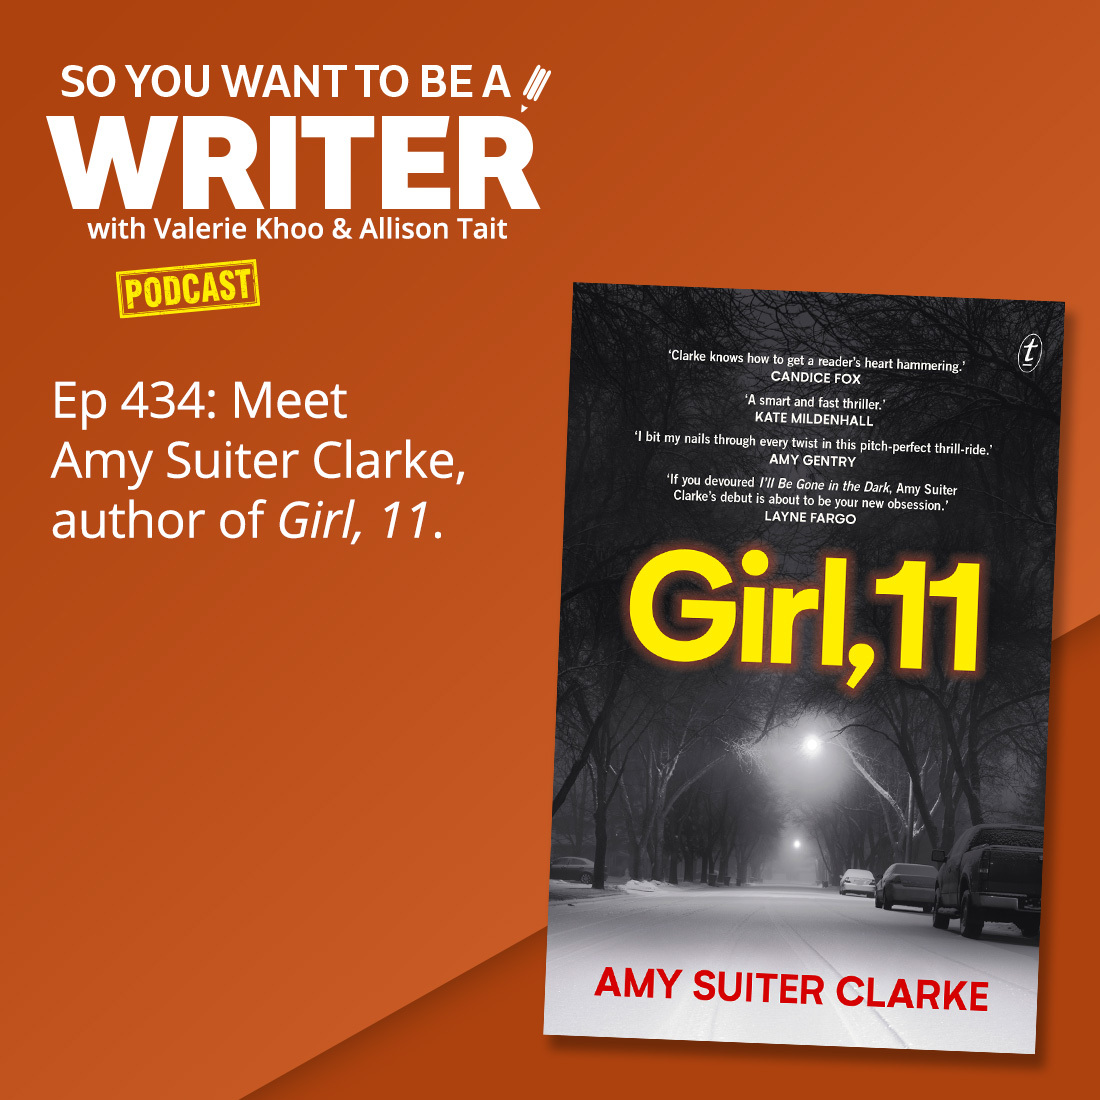 WRITER 434: Meet Amy Suiter Clarke, author of 'Girl, 11'.